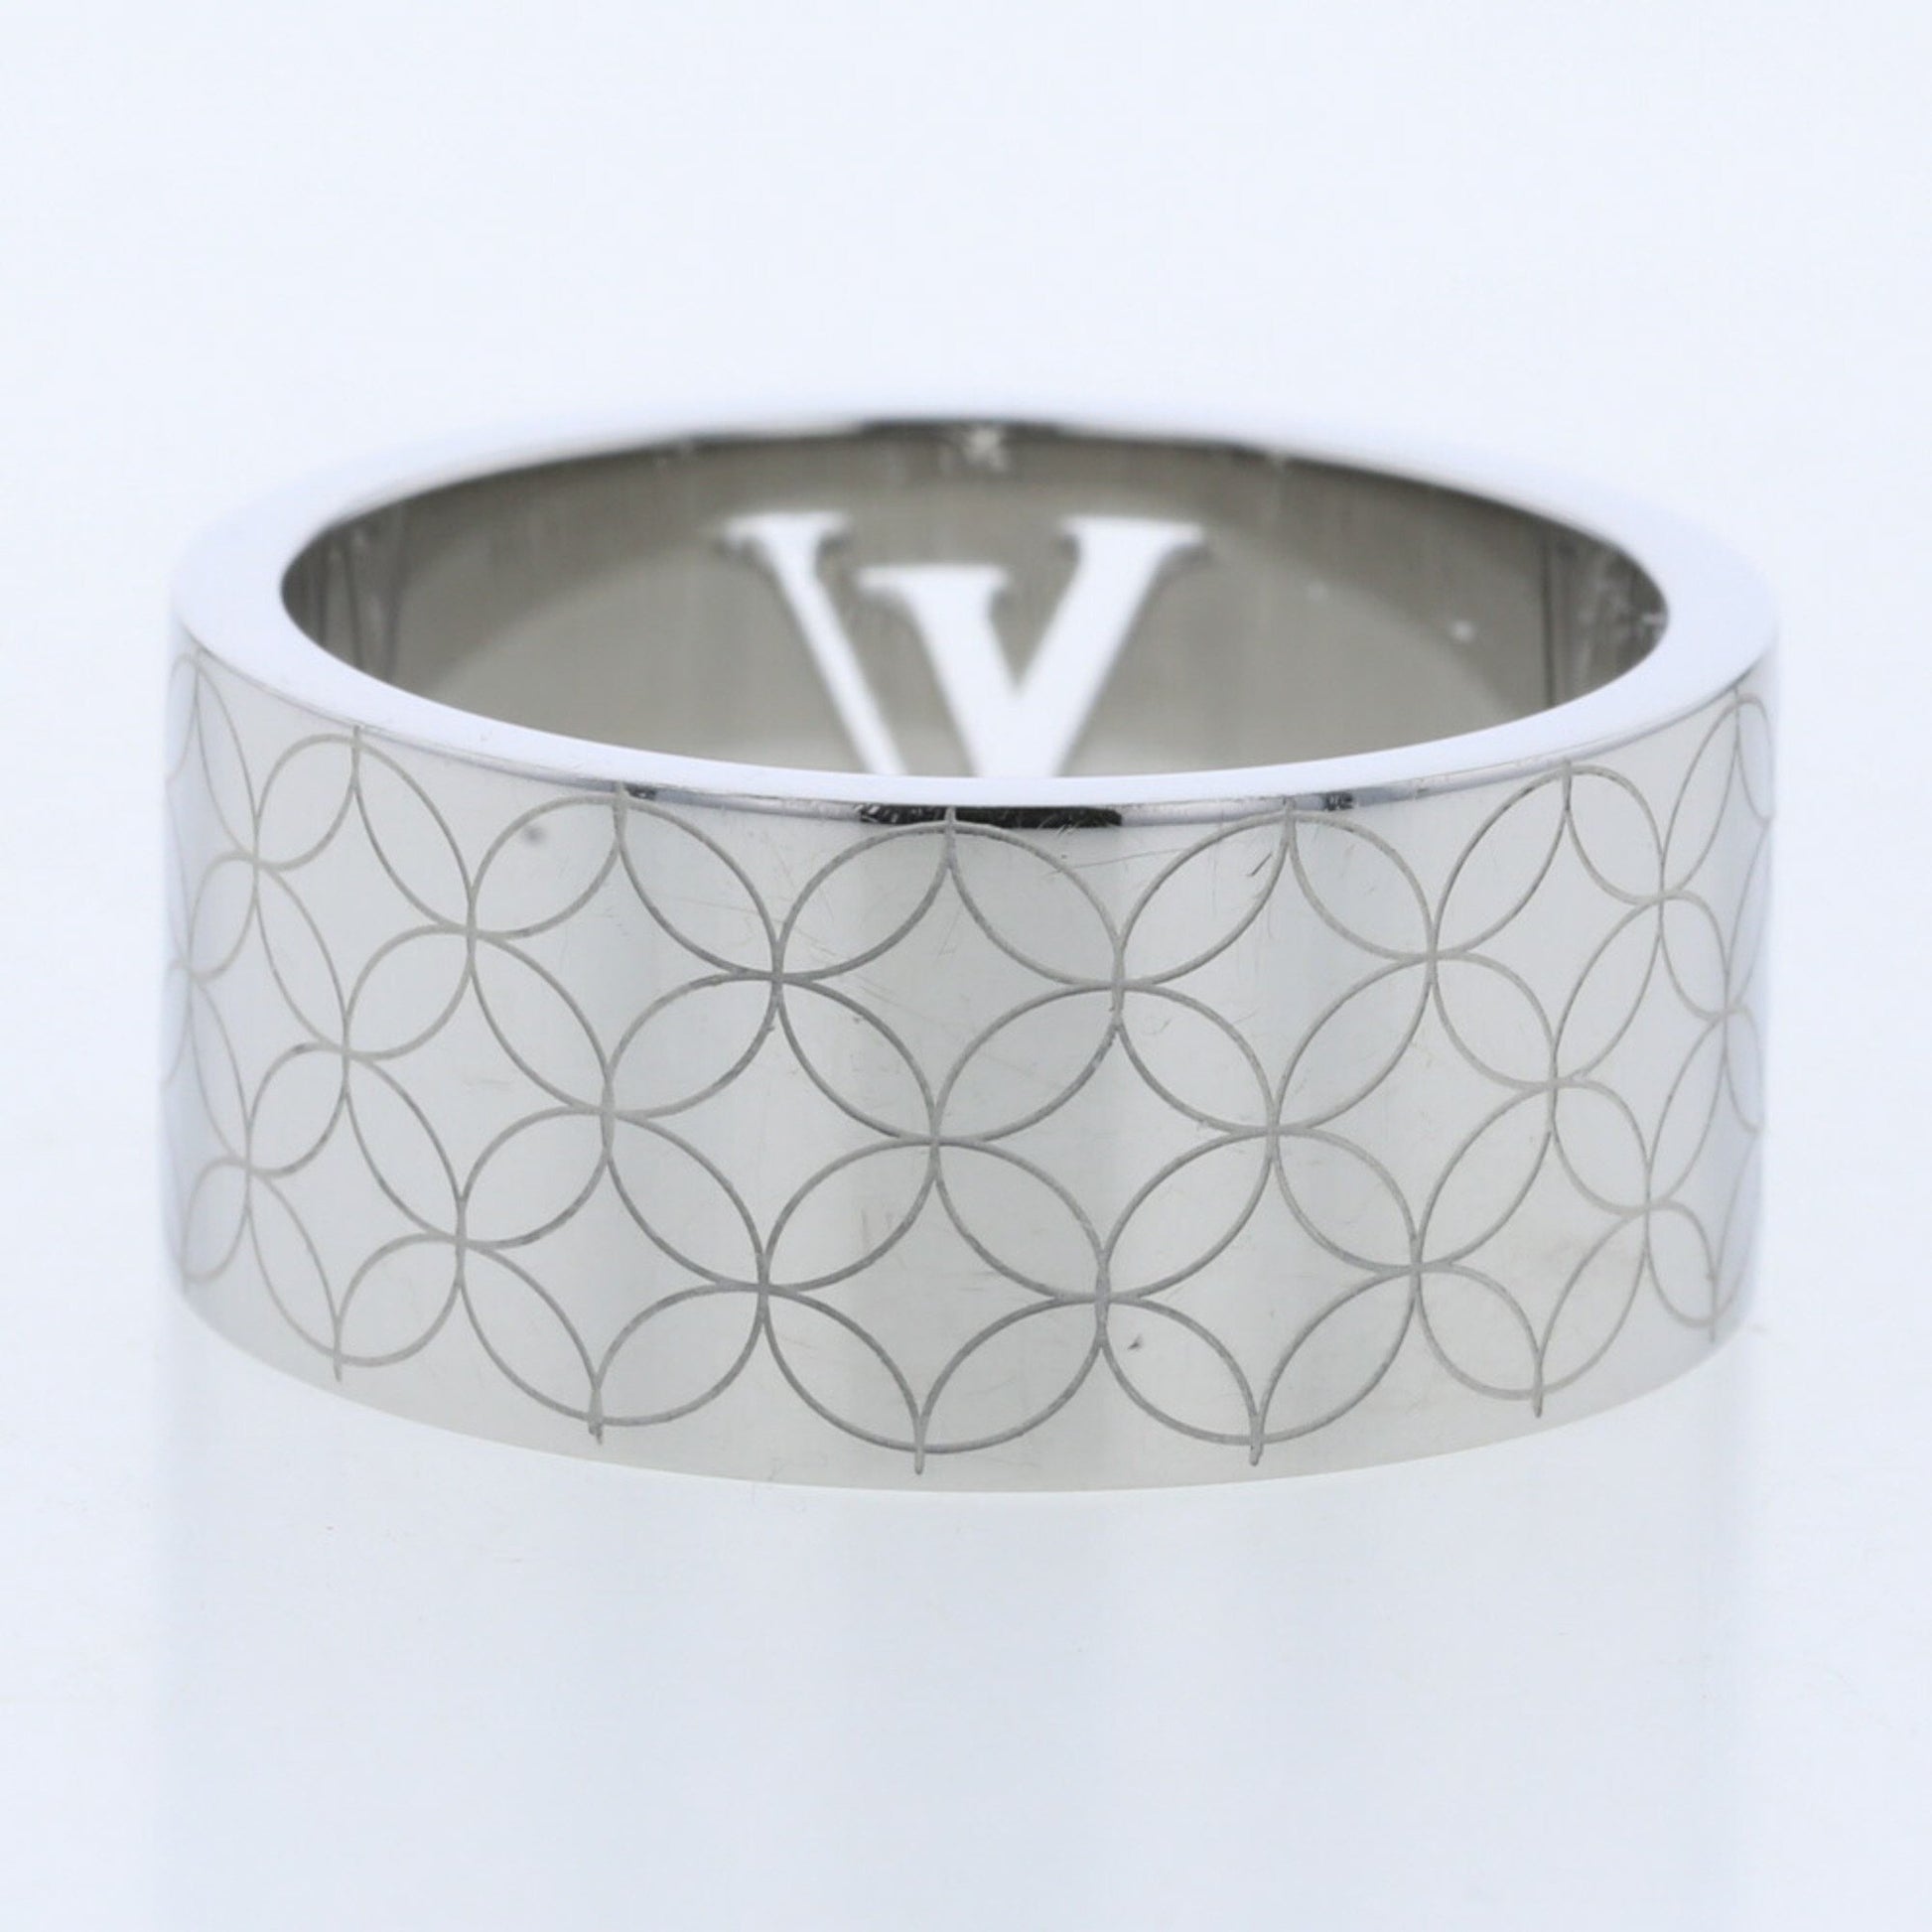 Shop Louis Vuitton My lv ring (M00615) by lufine